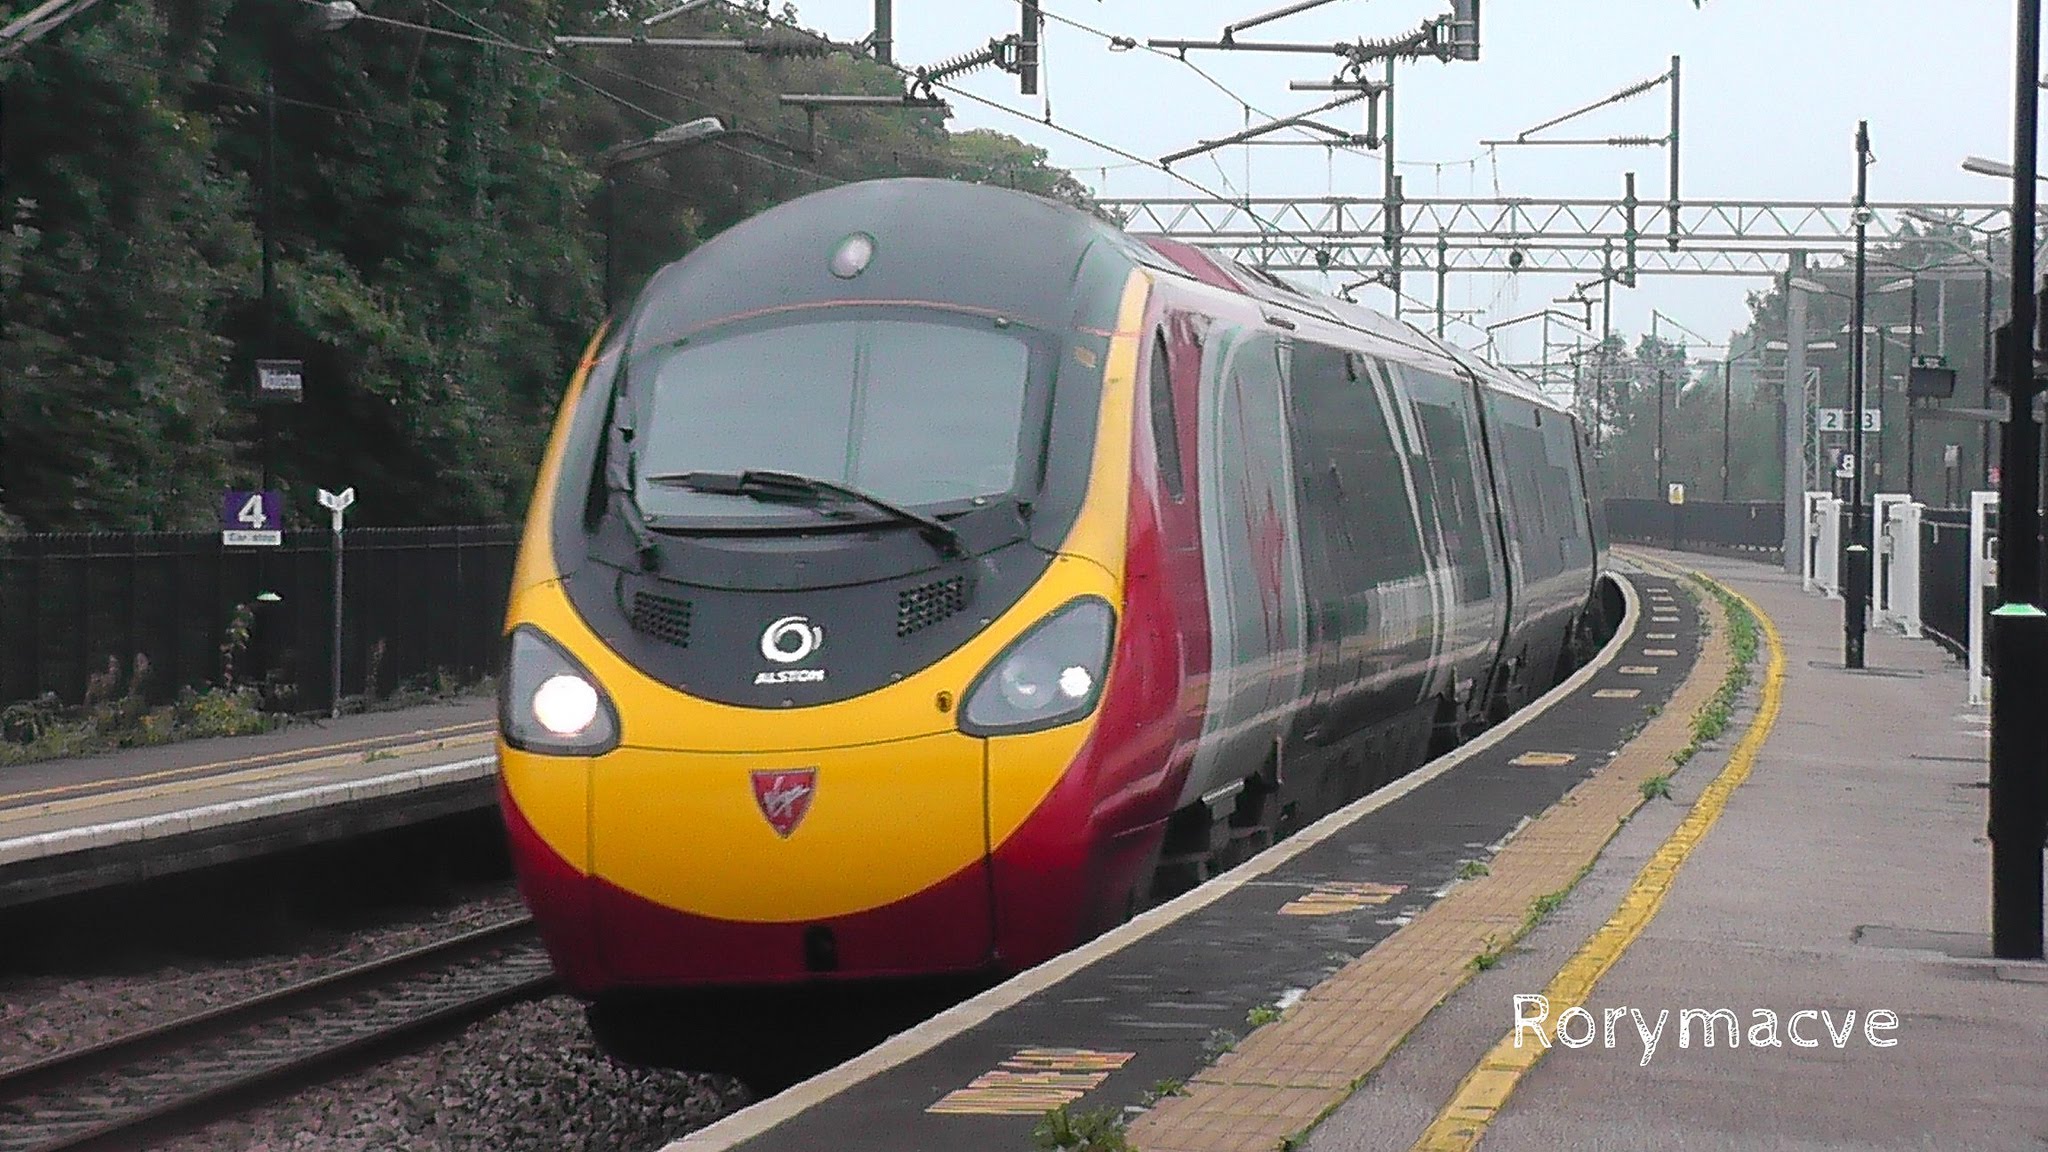 British trains at High Speed! - YouTube